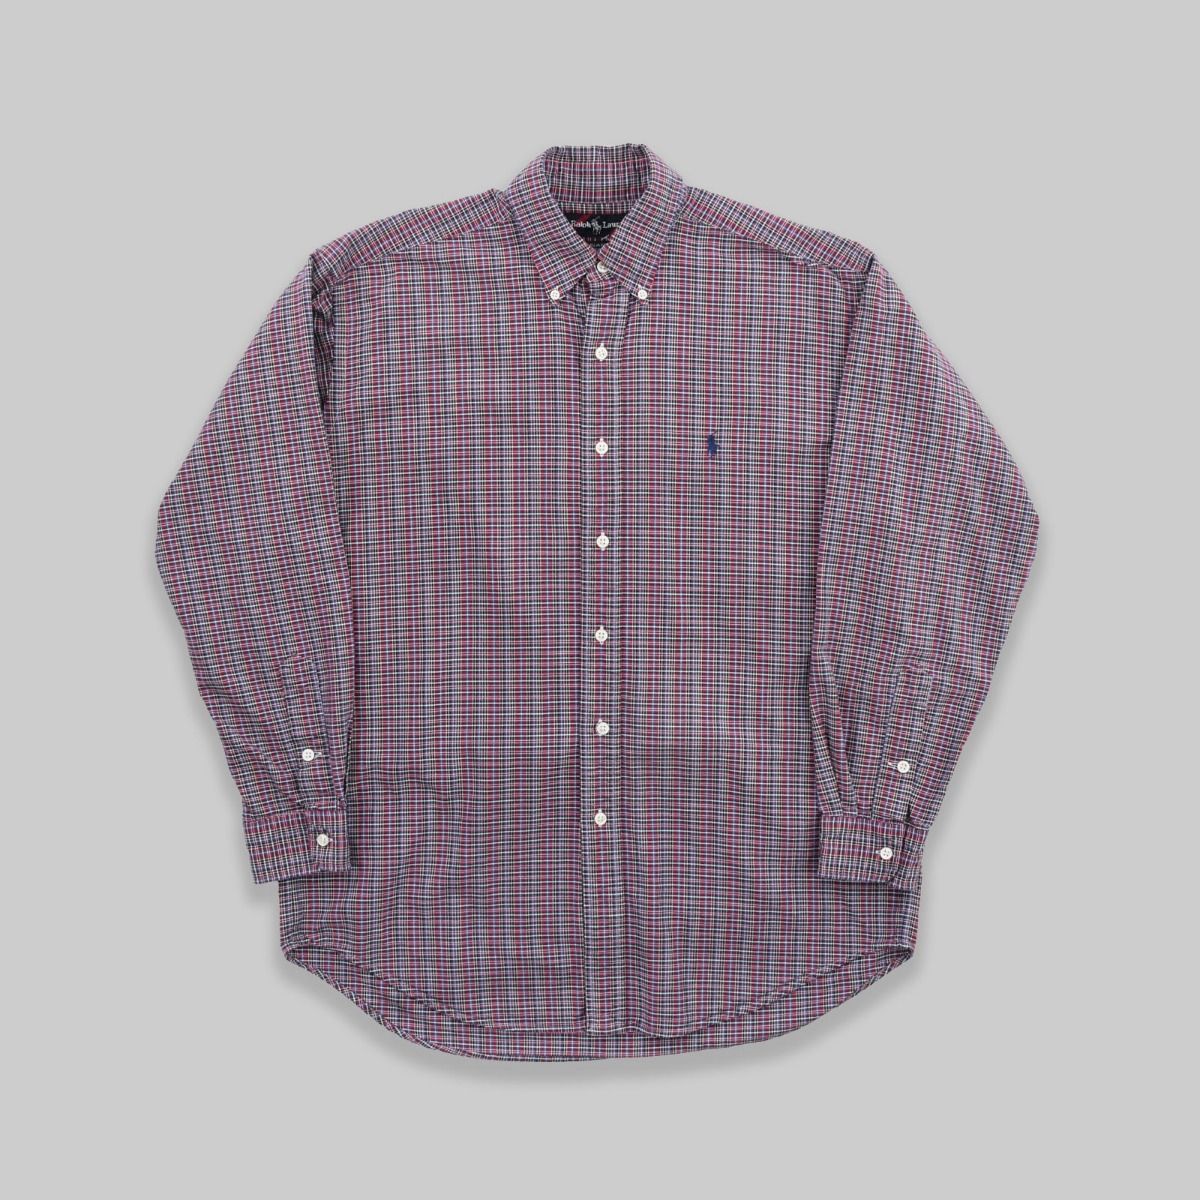  Ralph Lauren Checkered Blake Shirt